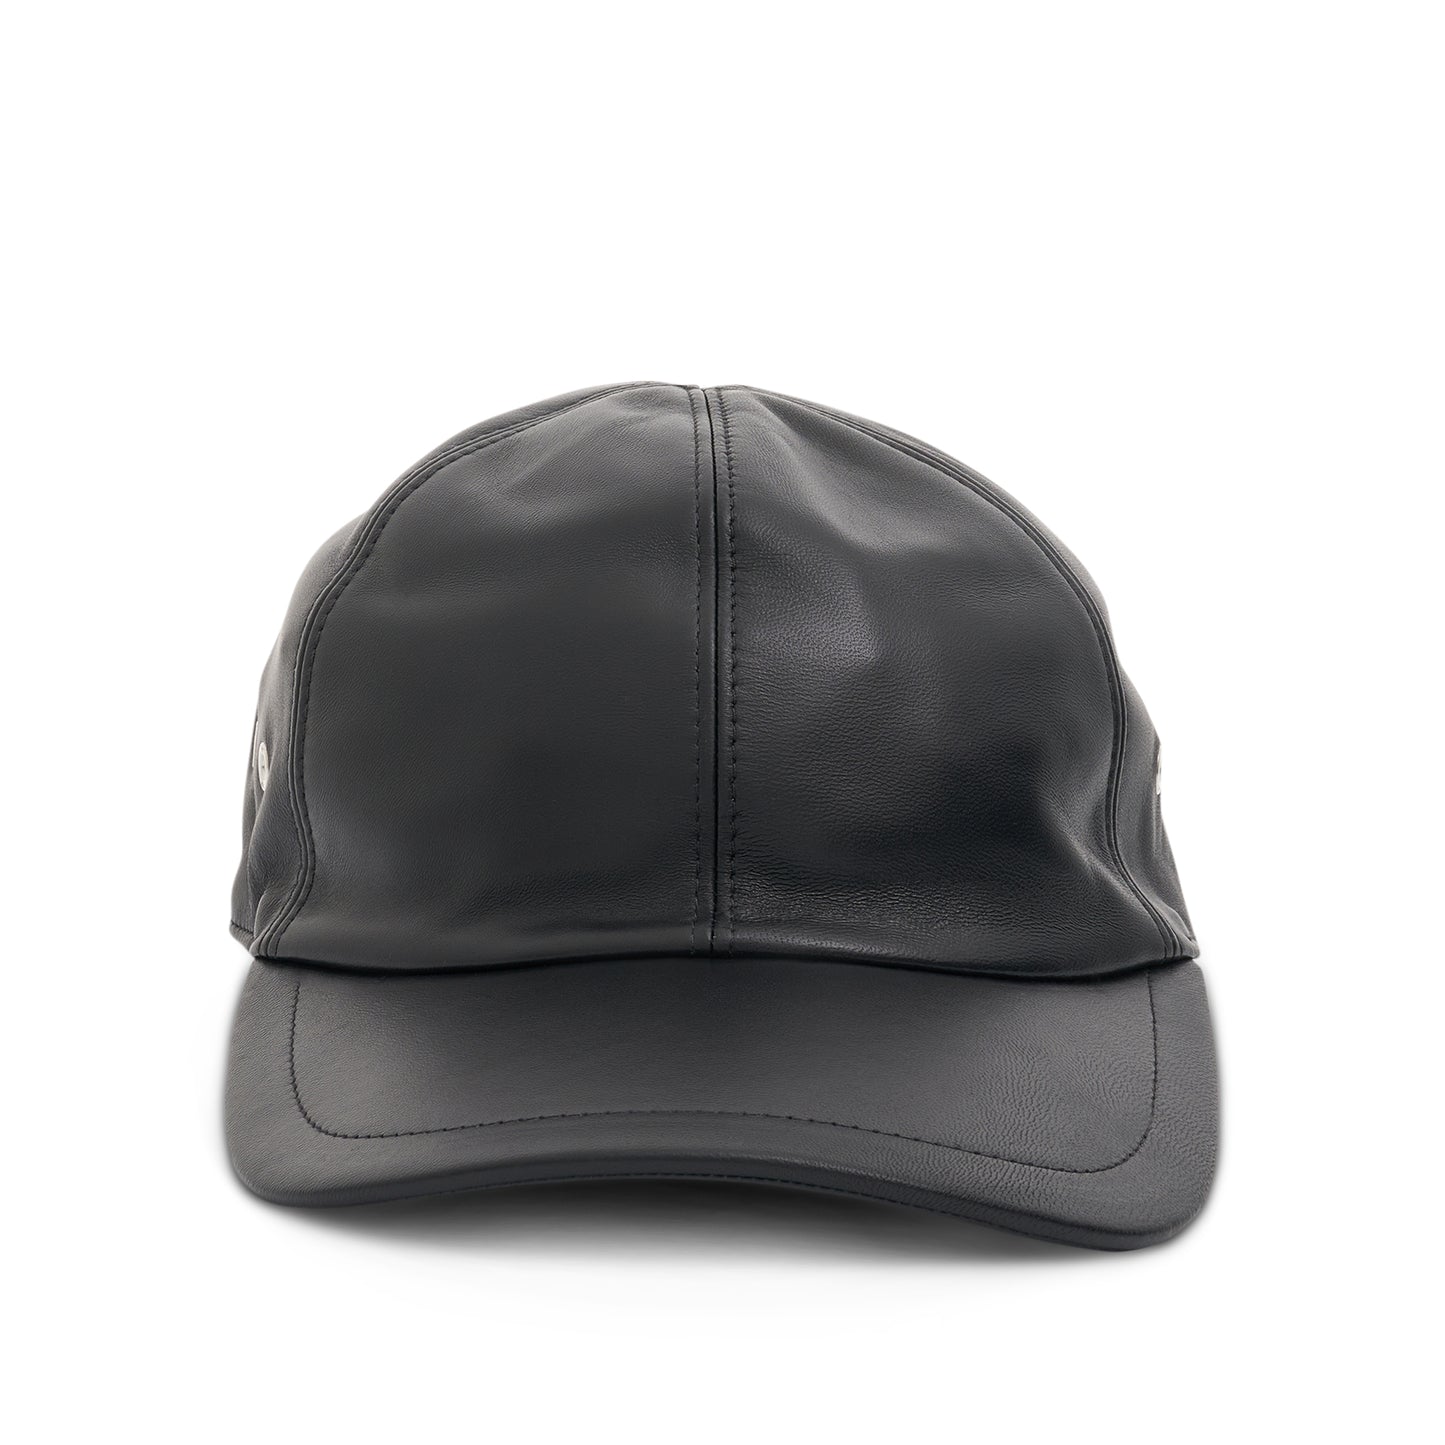 Leather Baseball Cap in Black